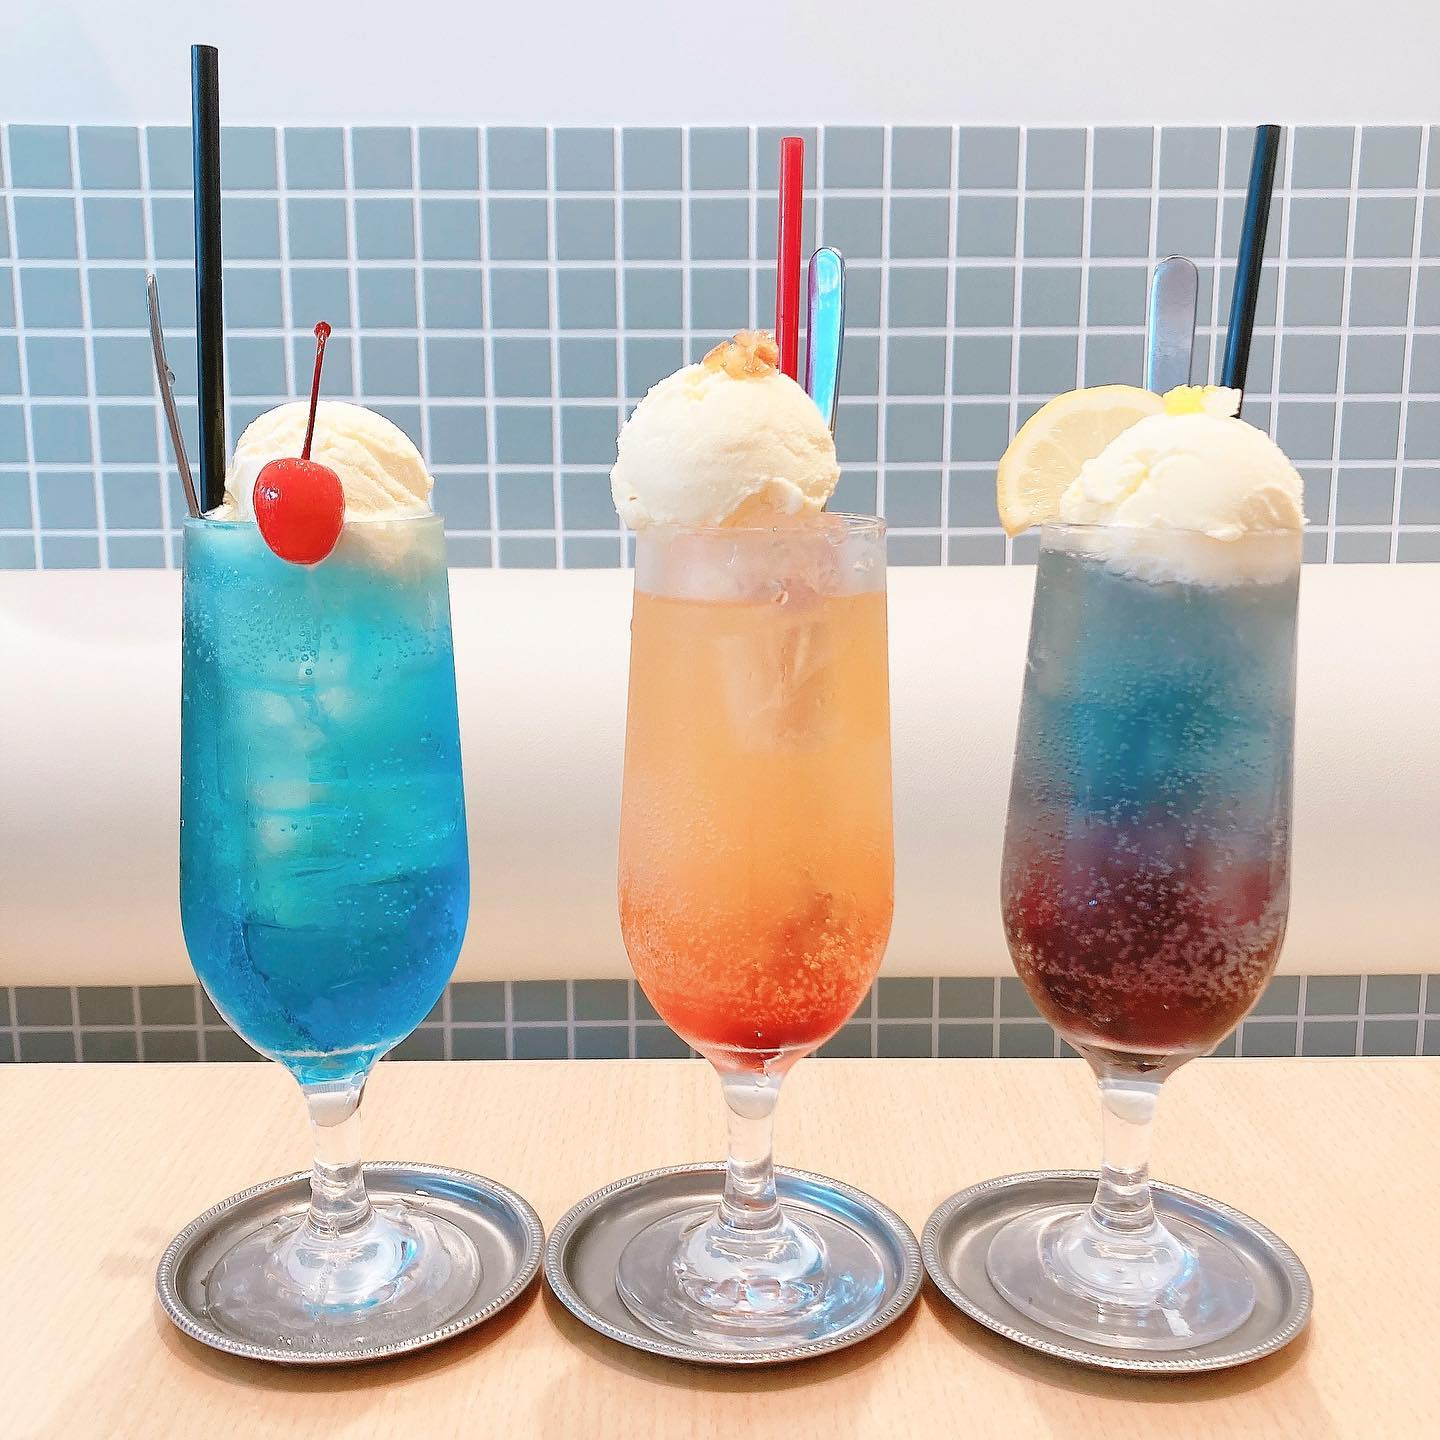 Otenki Parlour - collage of sky-themed cream soda